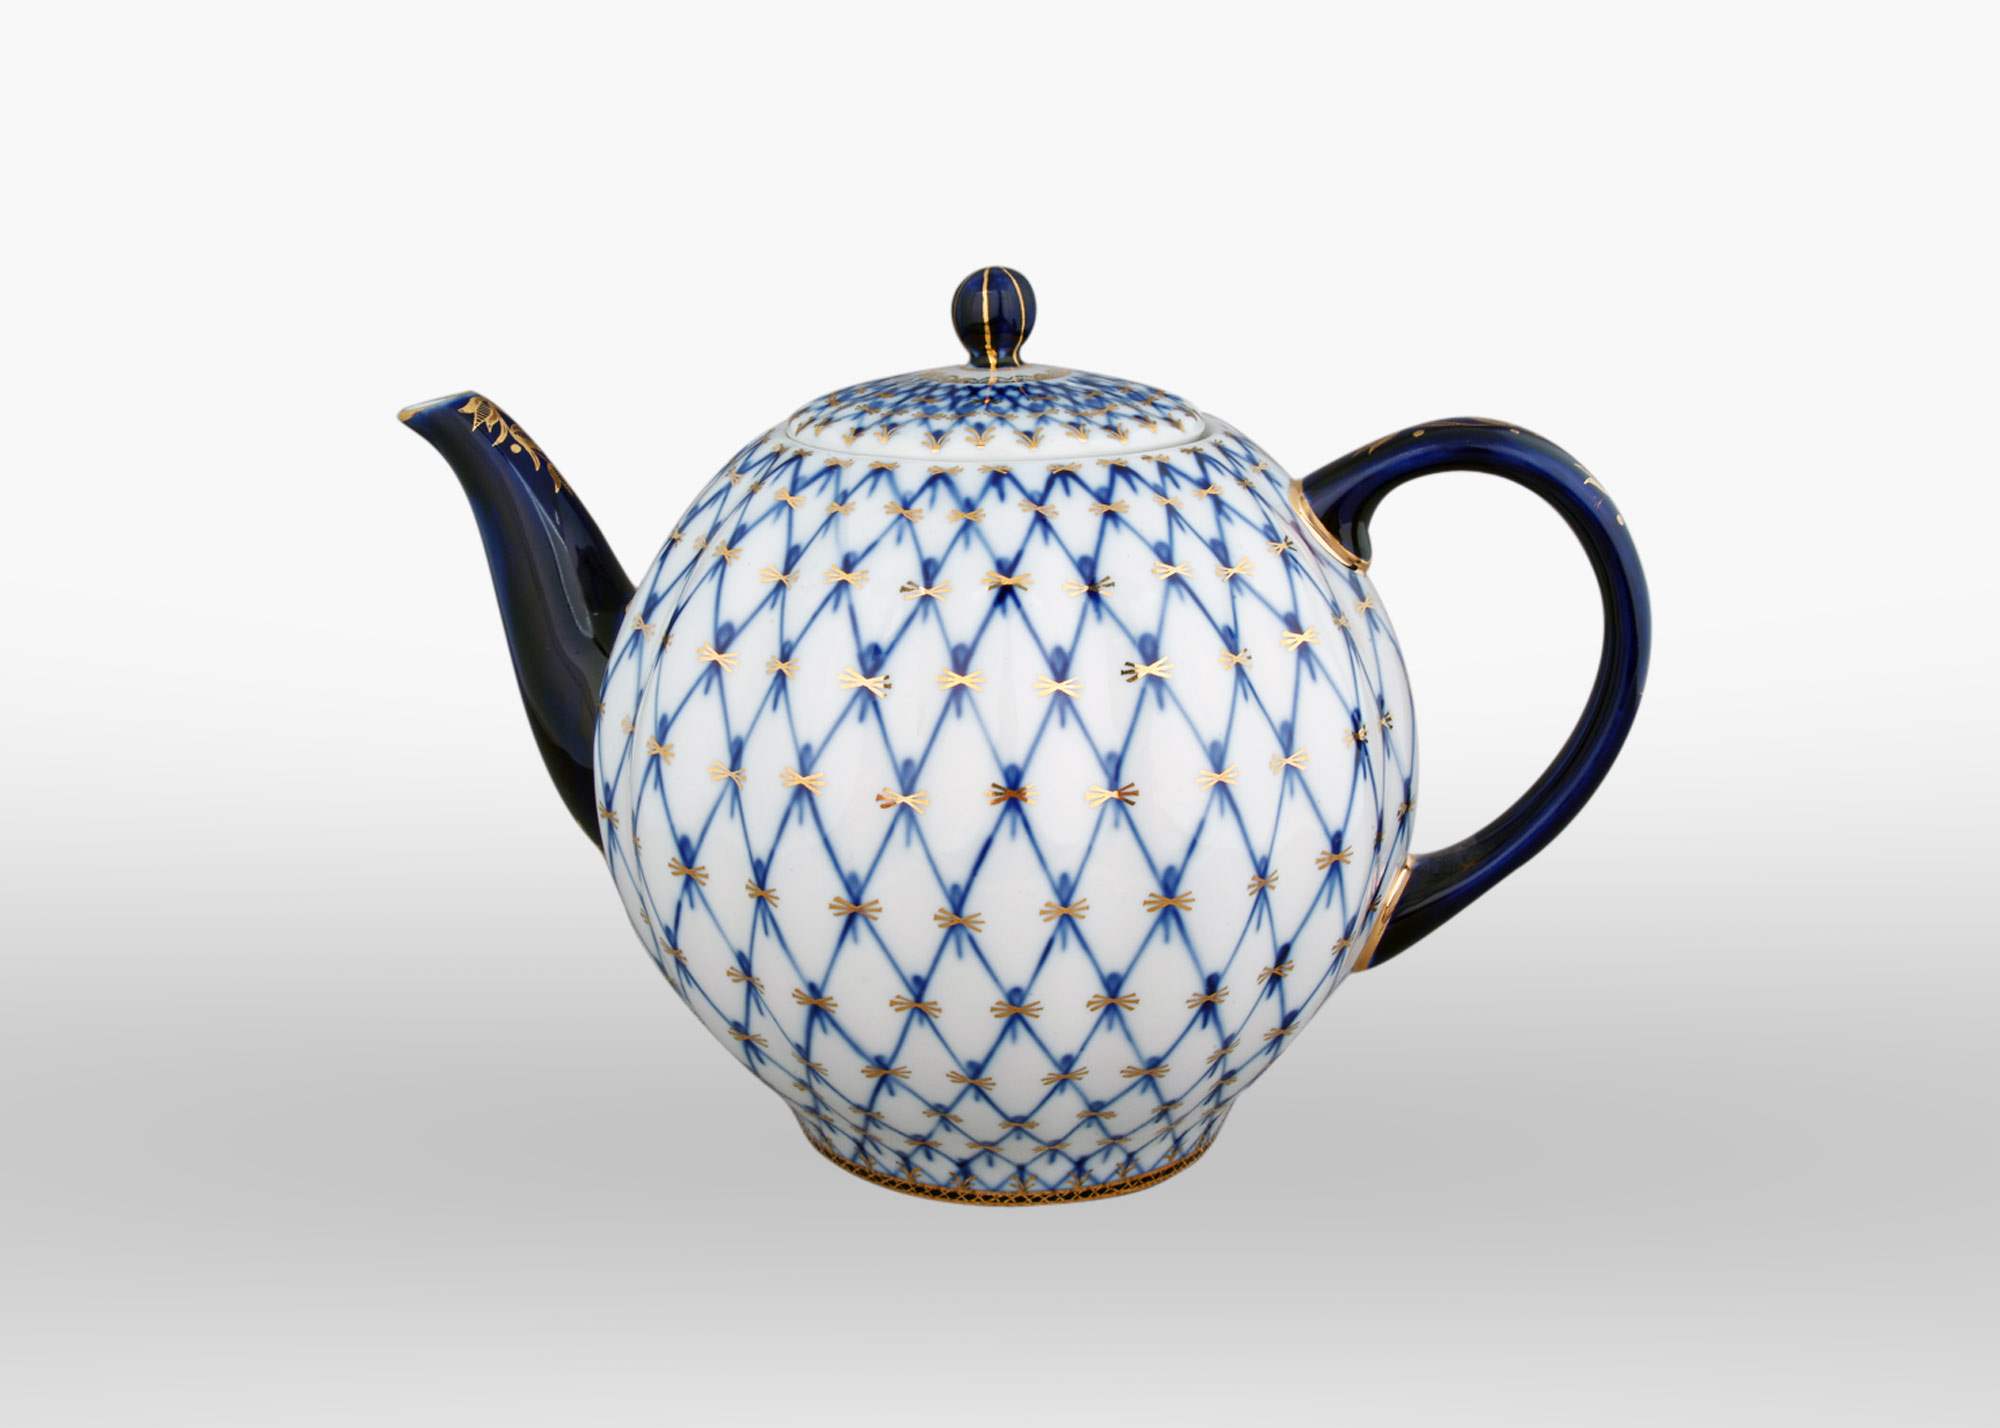 Buy Cobalt Net Teapot Large (9 cup) at GoldenCockerel.com